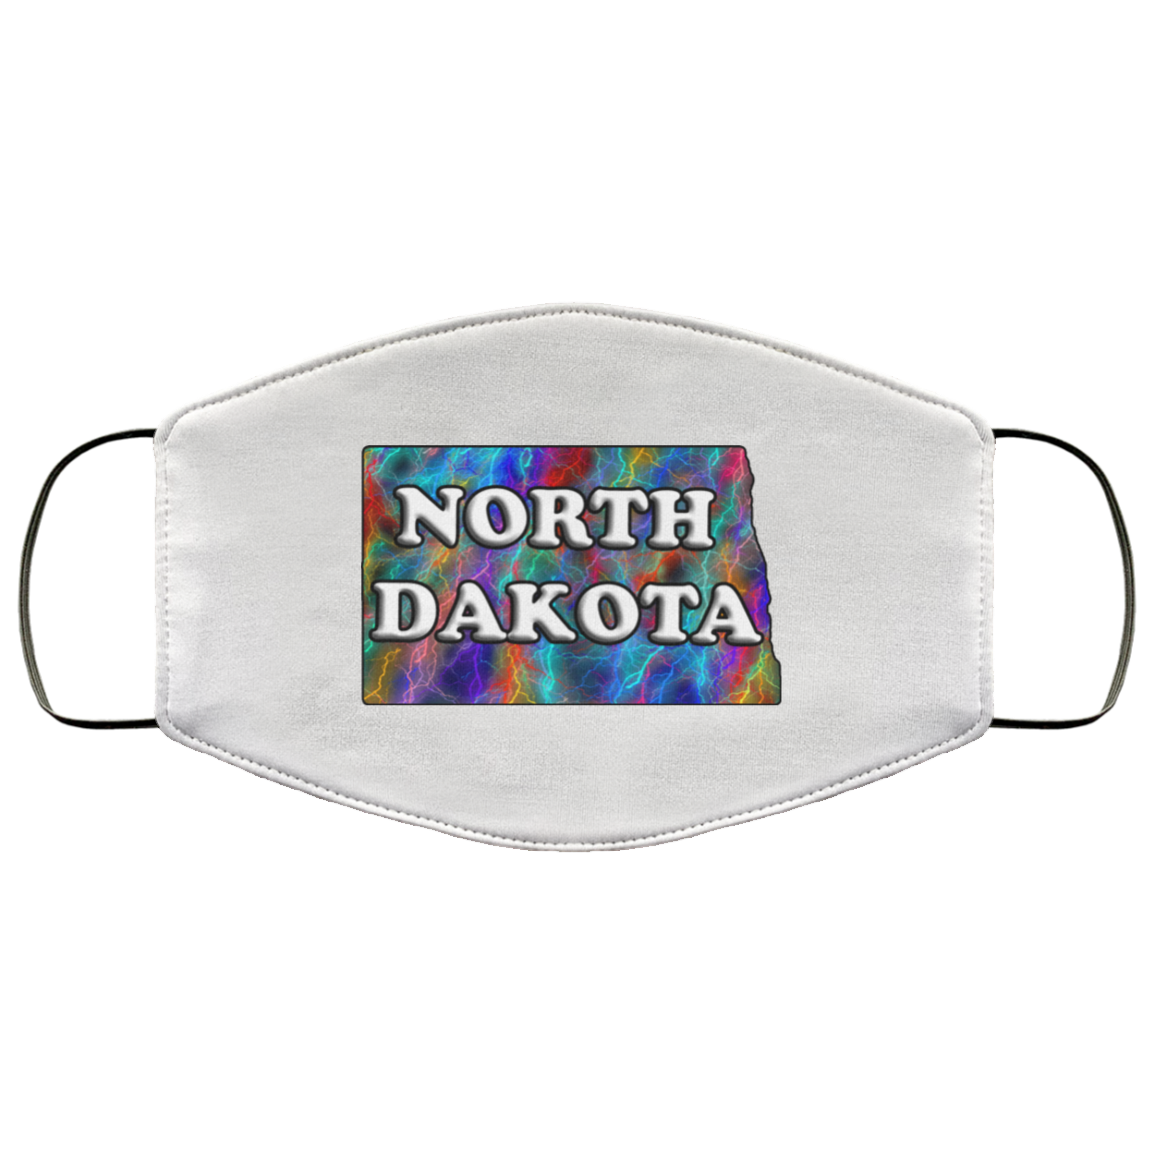 North Dakota 2 Layer Protective Face Mask